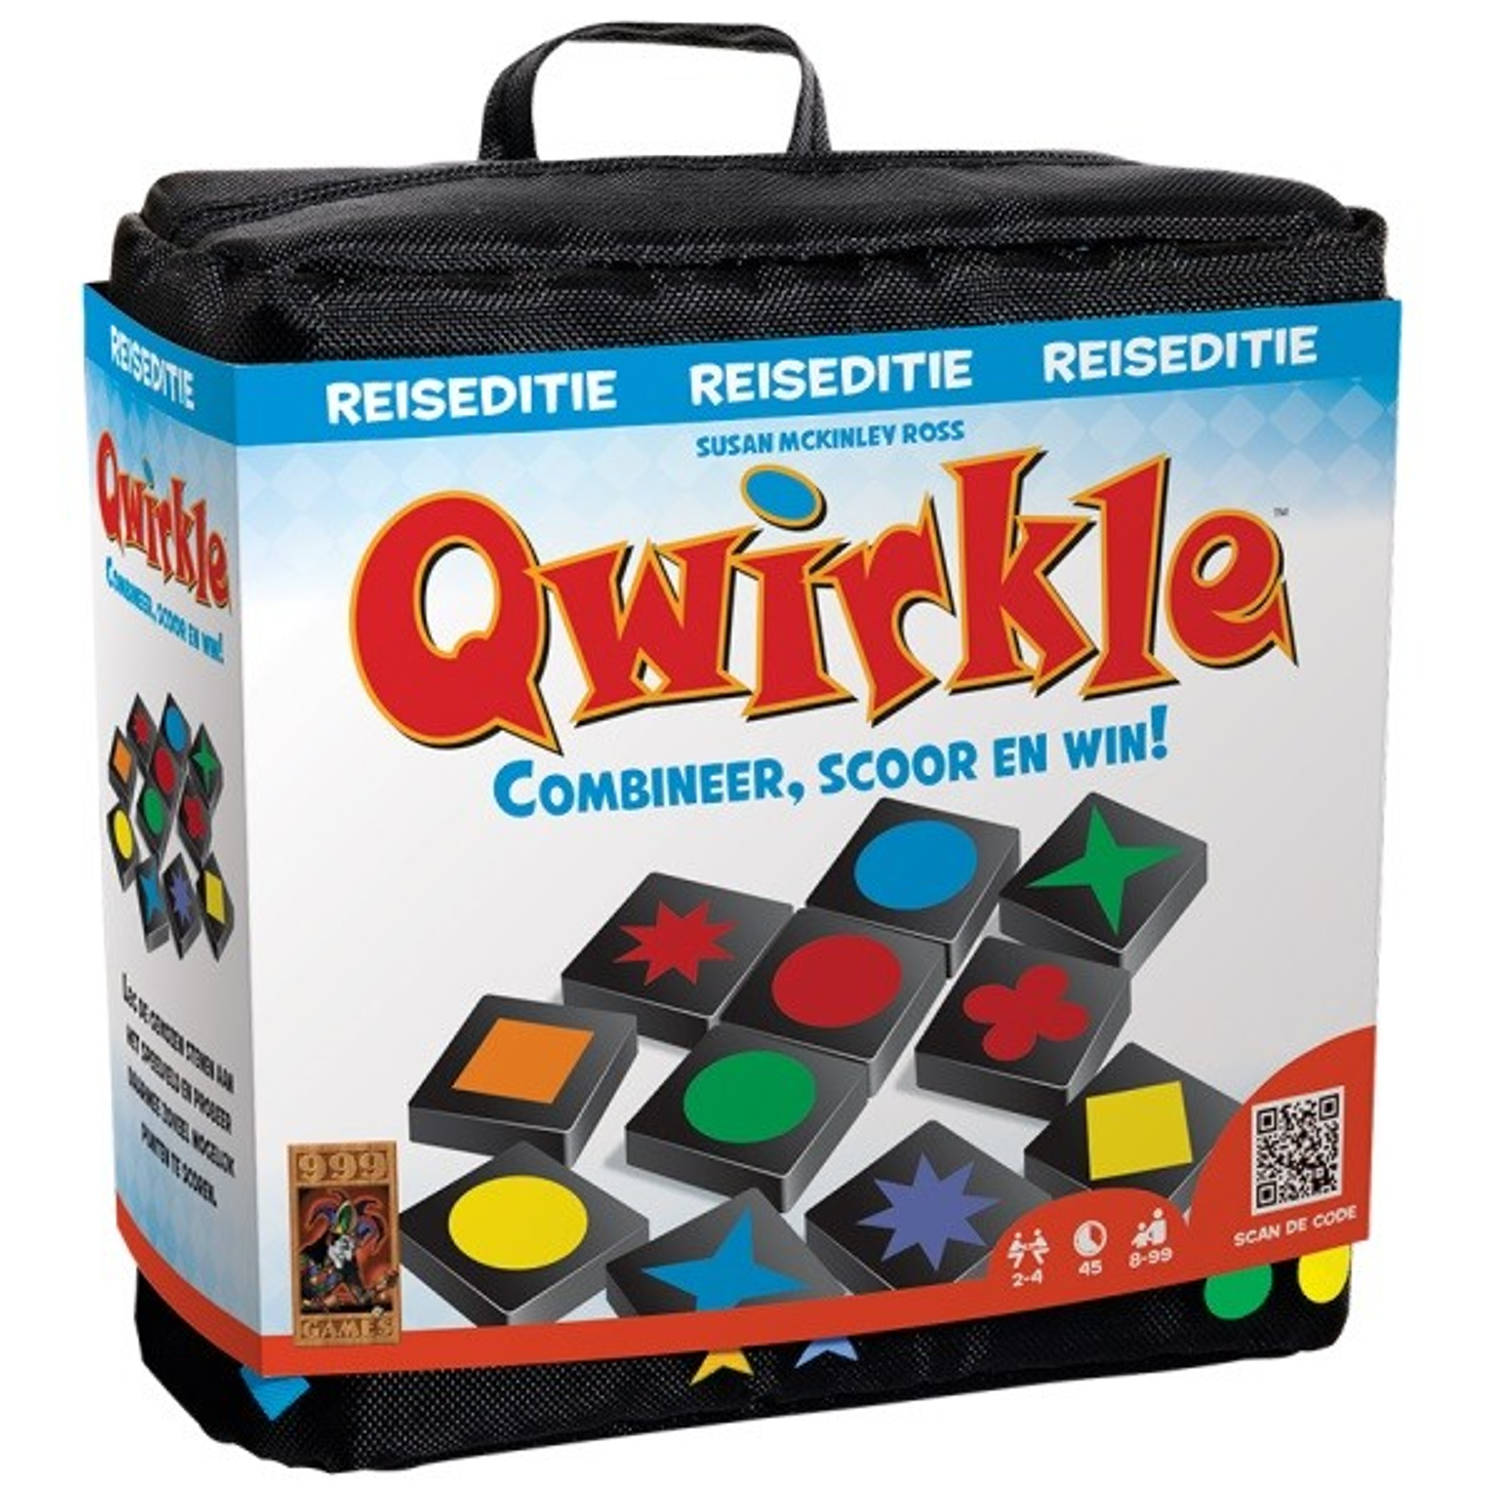 Qwirkle reiseditie 999 Games